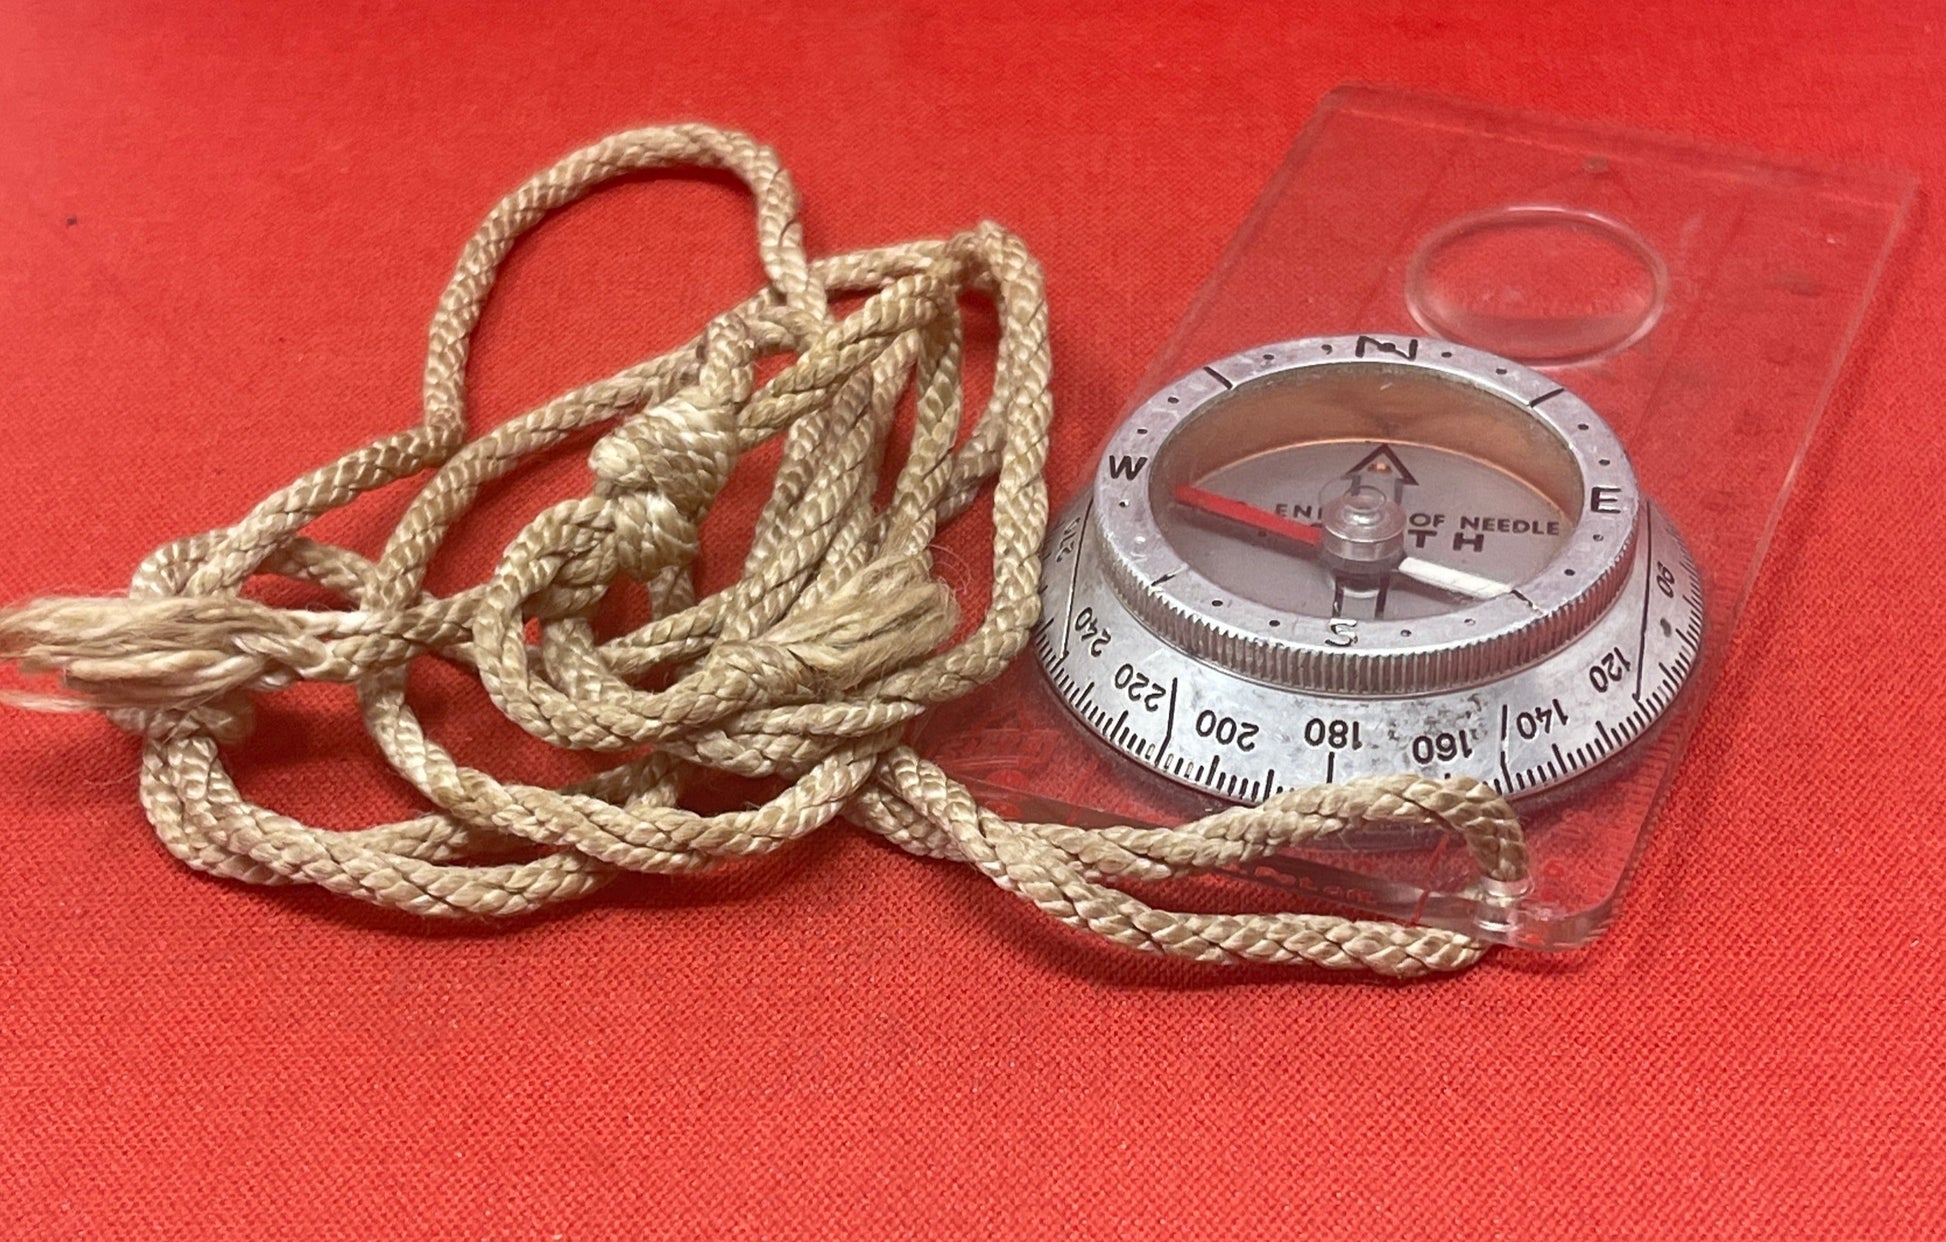 Vintage Silva Compass with Lanyard